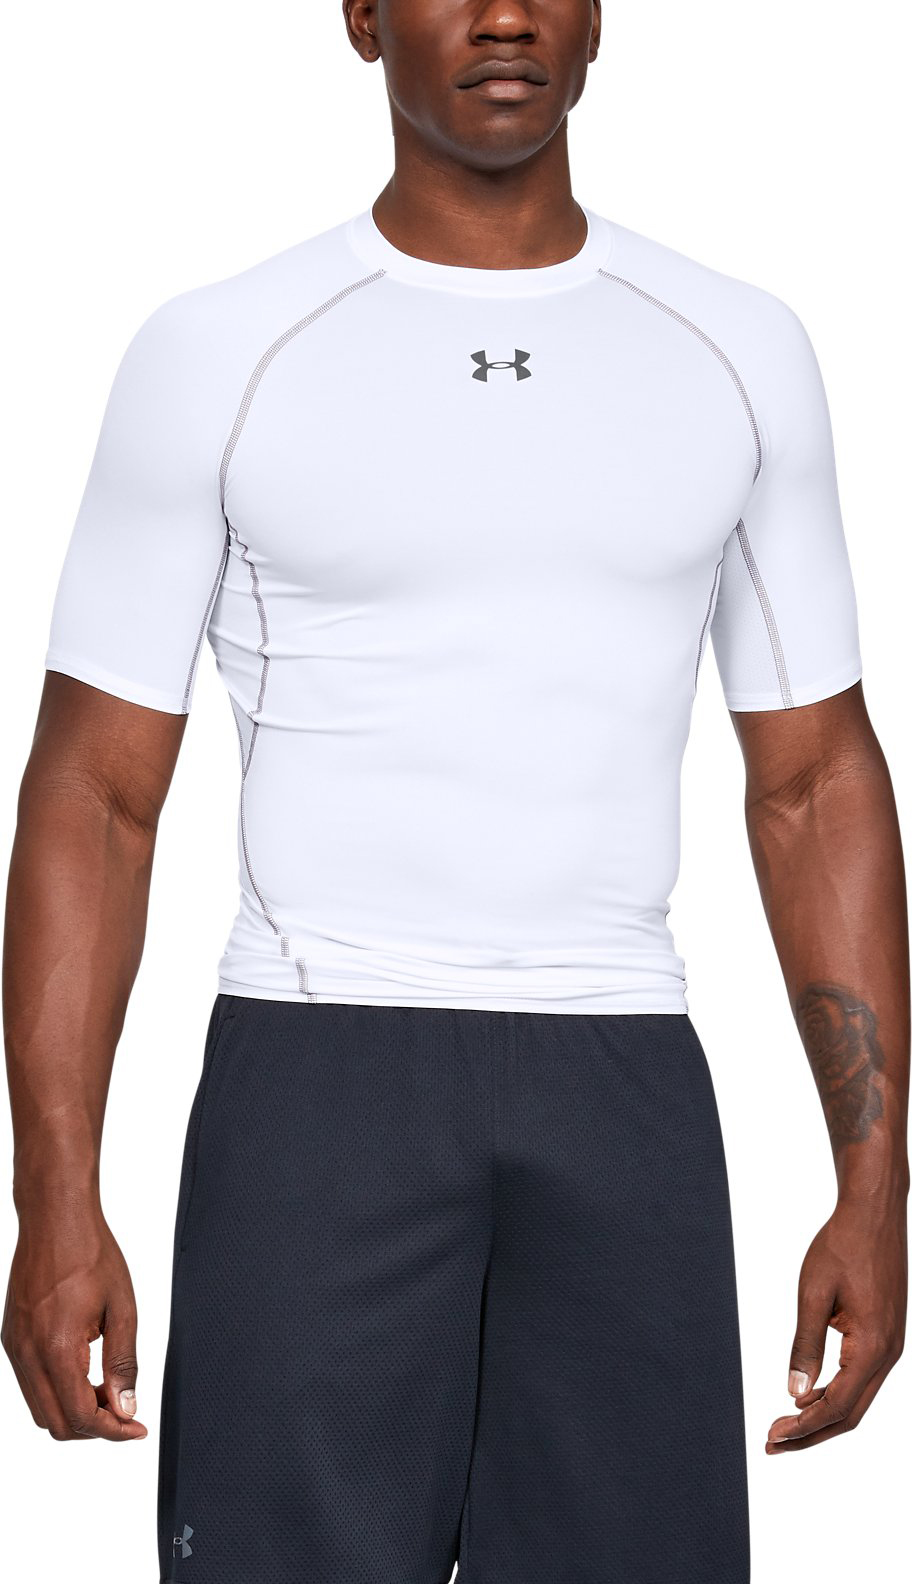 Under Armour Men's HeatGear Armour Short Sleeve Compression Shirt - White